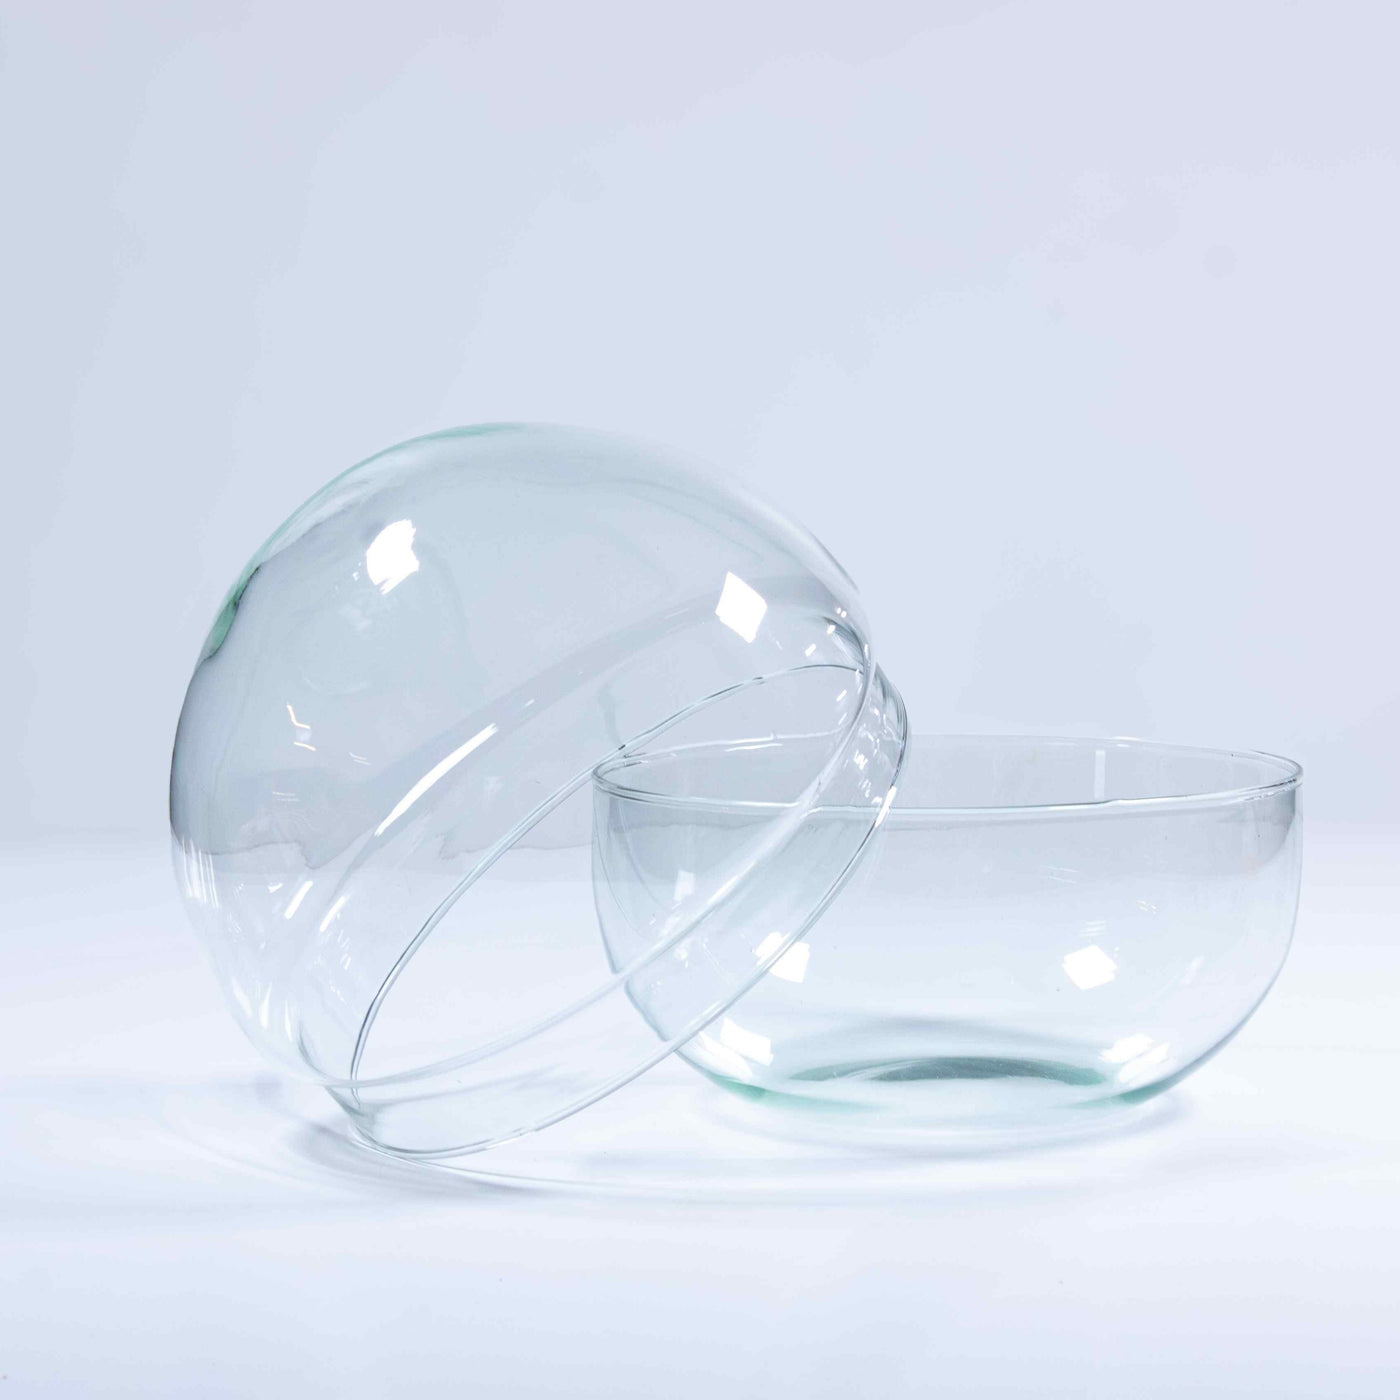 Spacious terrarium glass: The foundation for your botanical masterpiece.